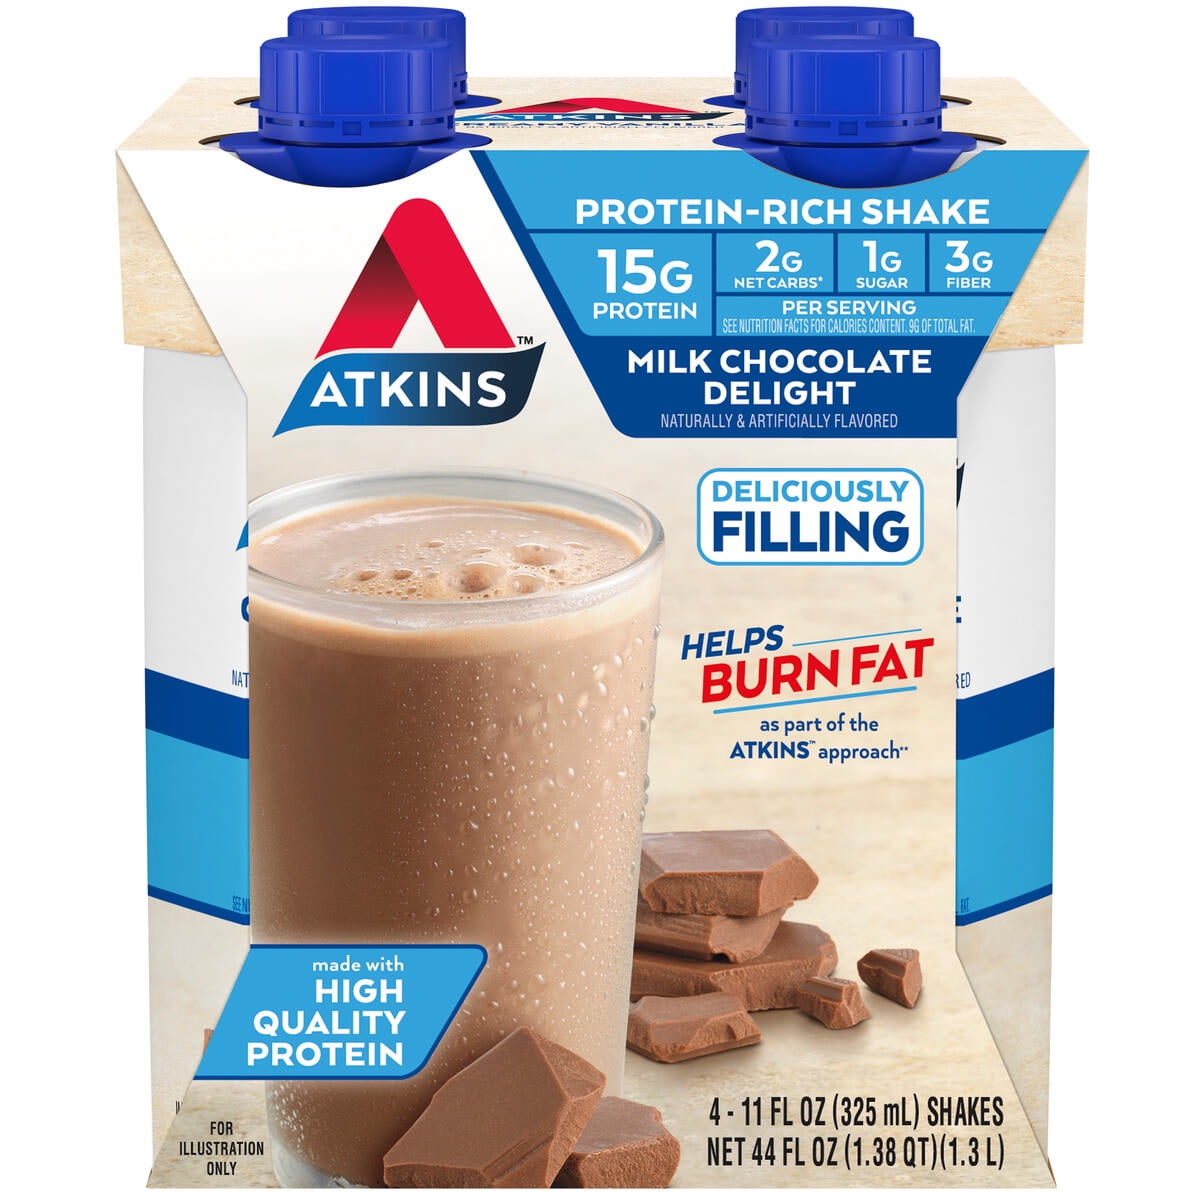 Atkins Milk Chocolate Protein Shake (4-pack)